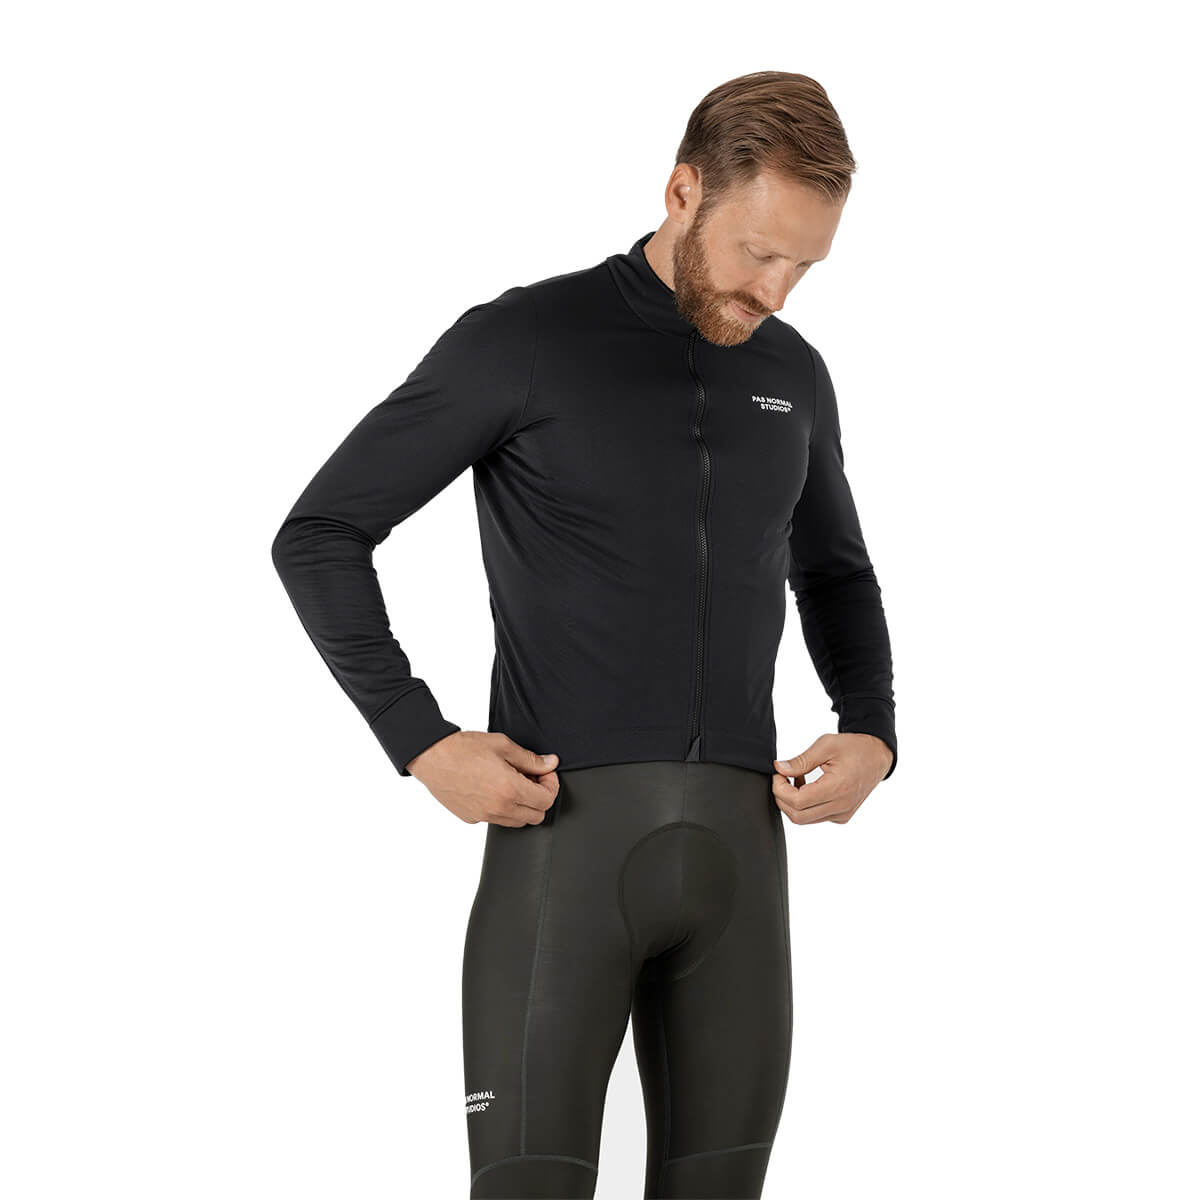 Men's Essential Thermal Long Sleeves Jersey - Black - S